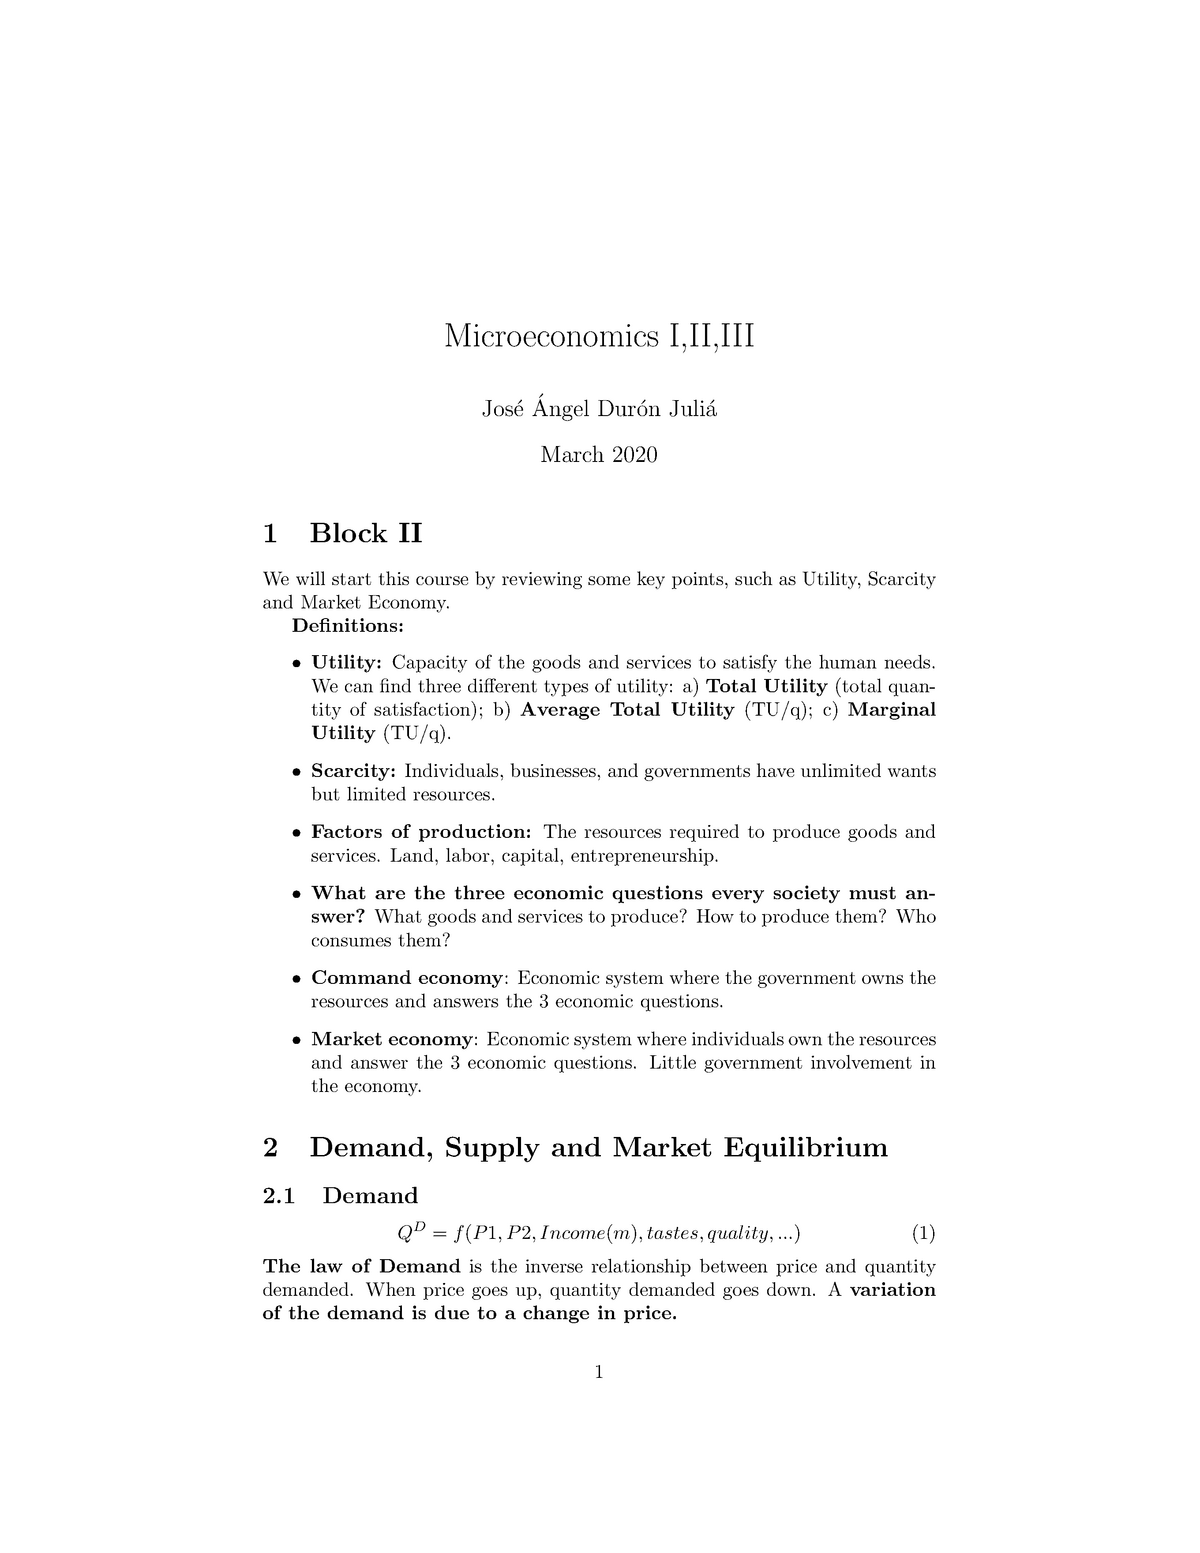 microeconomics iii assignment 2